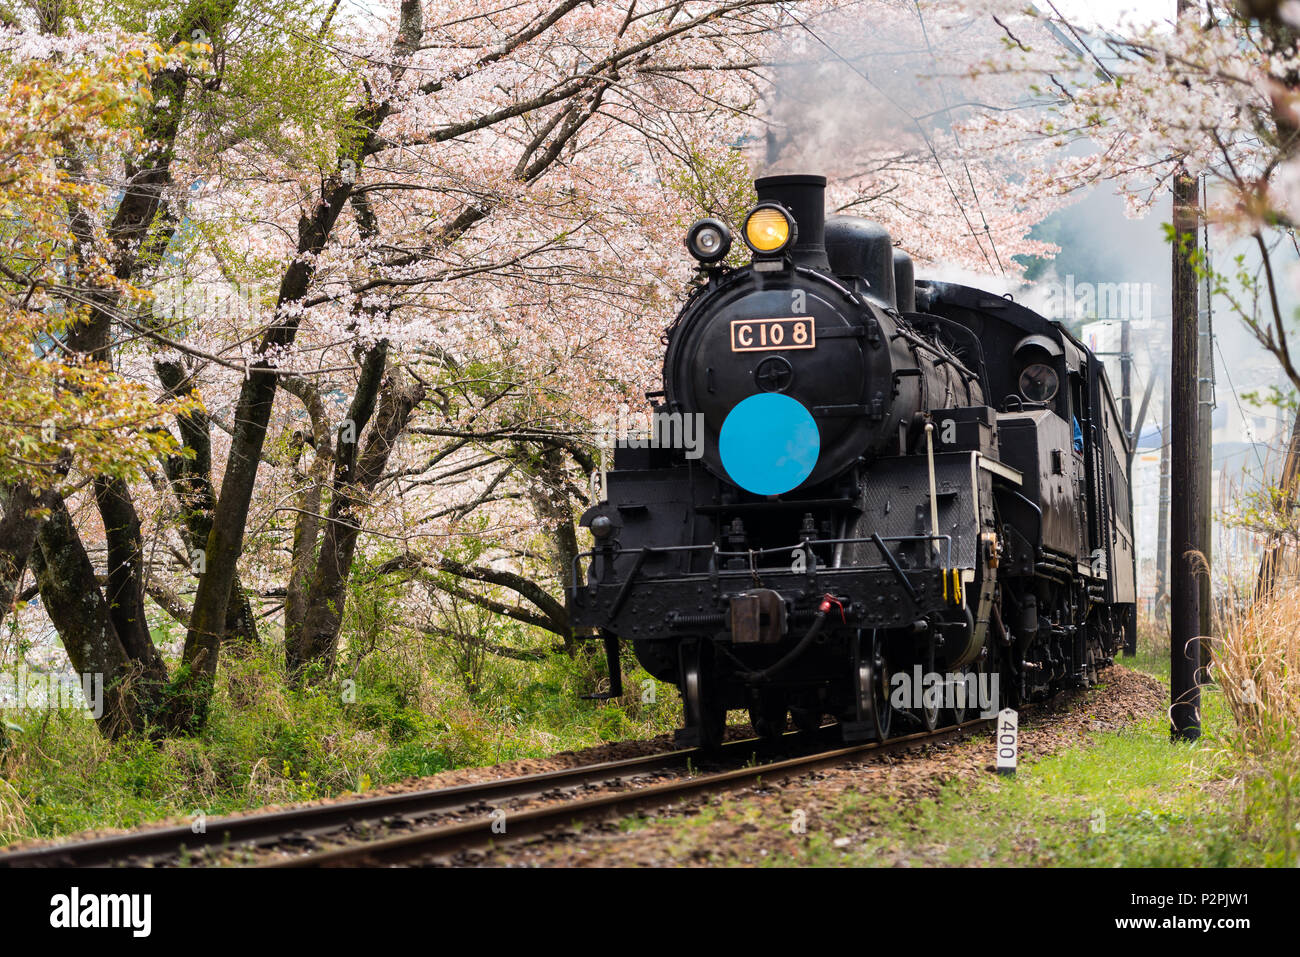 Steam locomotive train on railway passing through cherry blossom tunnel Stock Photo